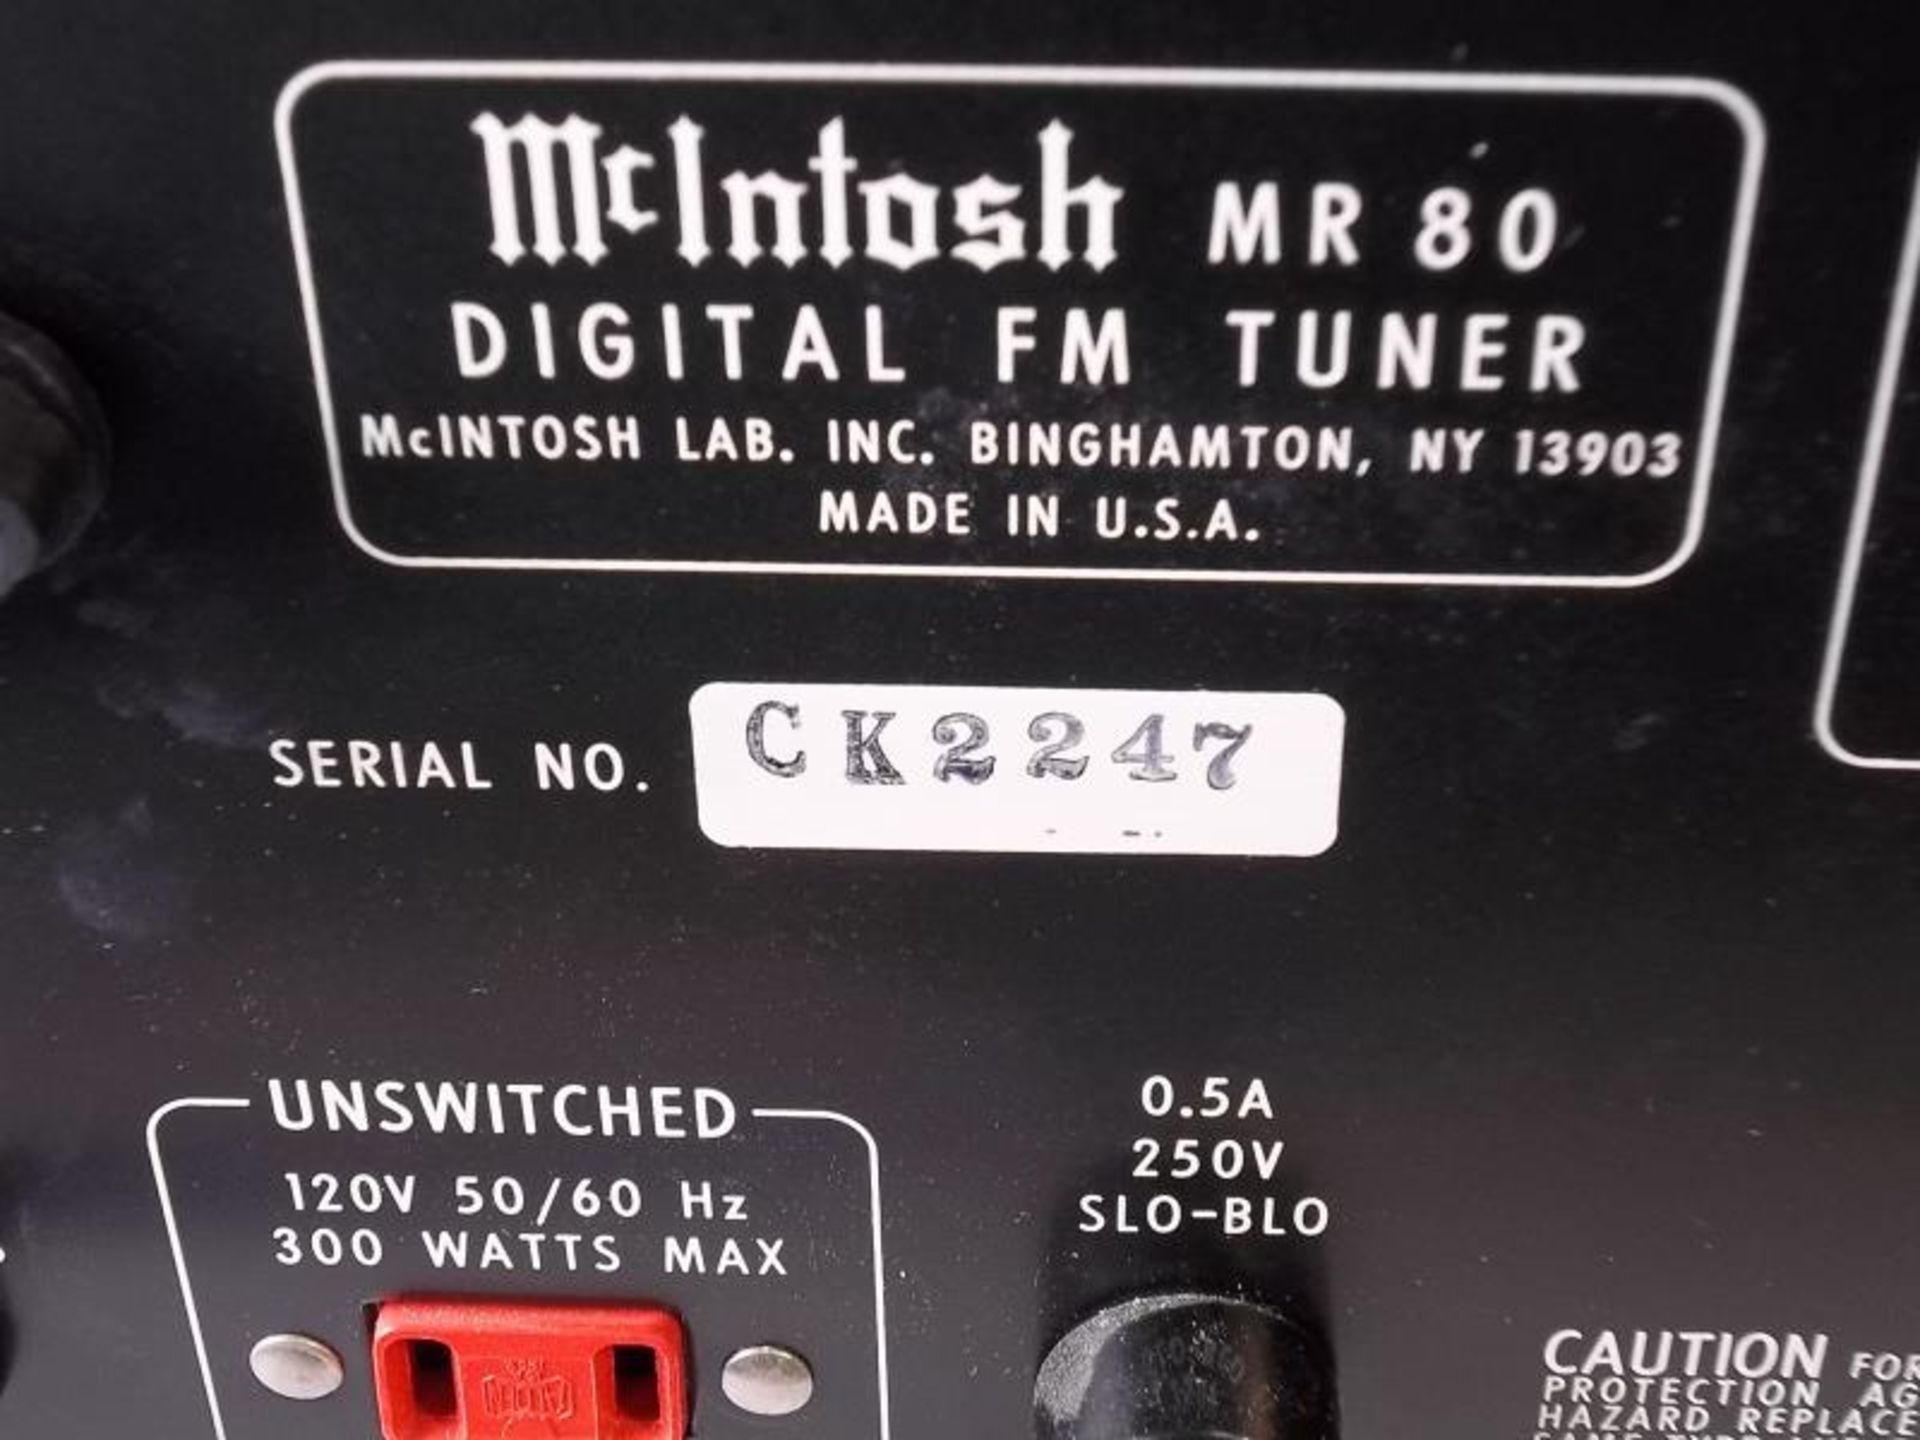 McIntosh MR 80, Digital FM Tuner, no case, s # CK2247, tested - does not power up - Image 6 of 7